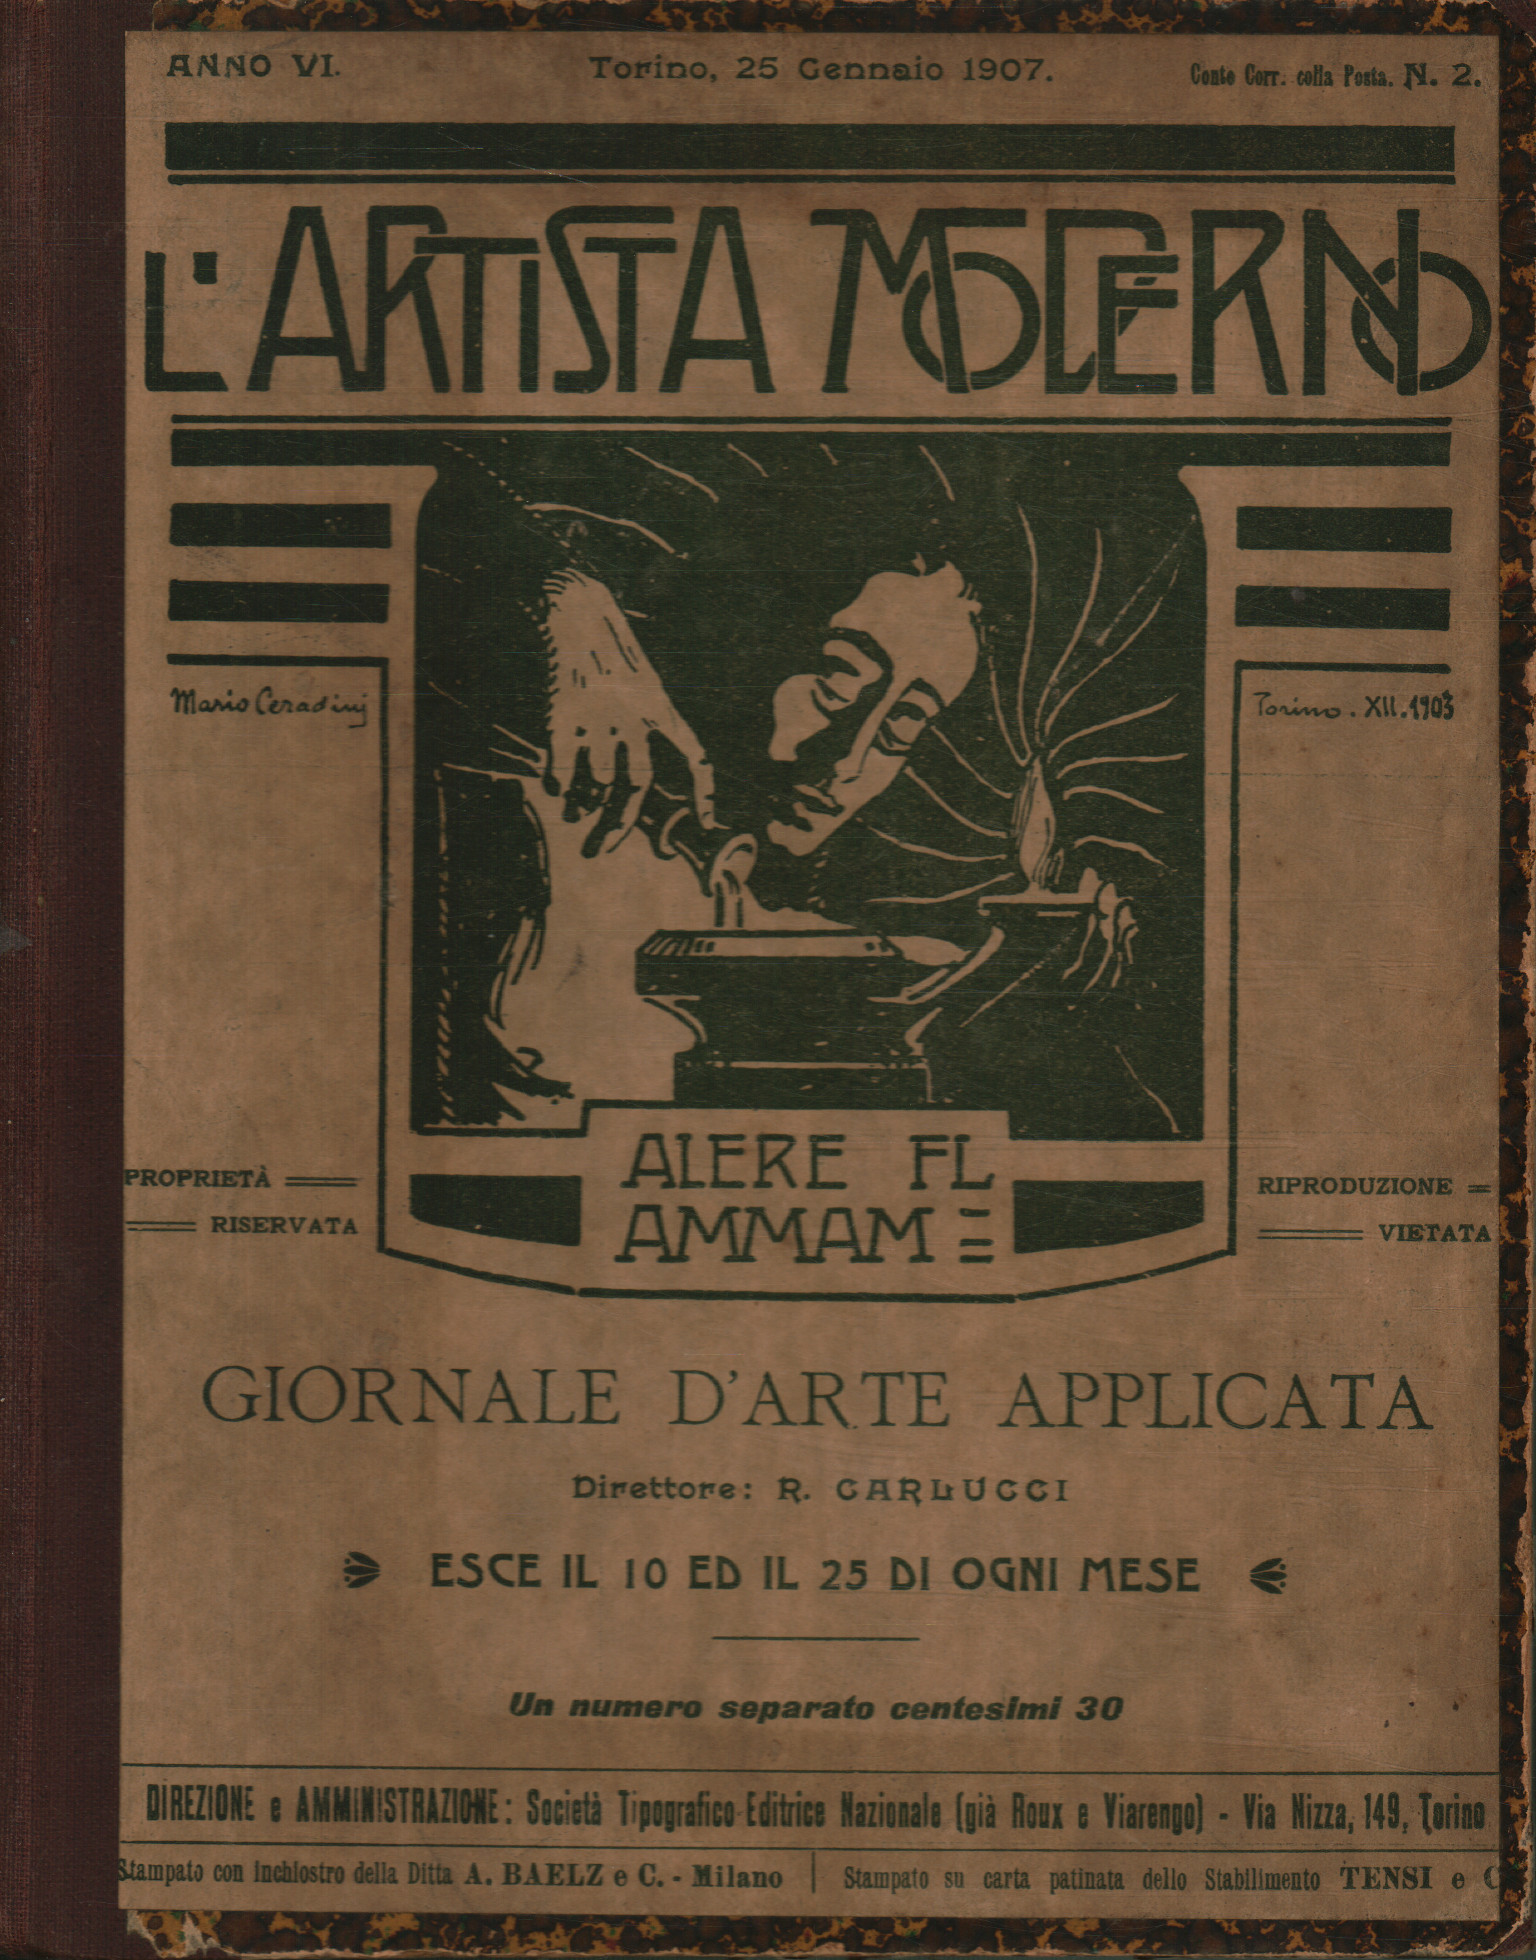 The modern artist Year VI 1907